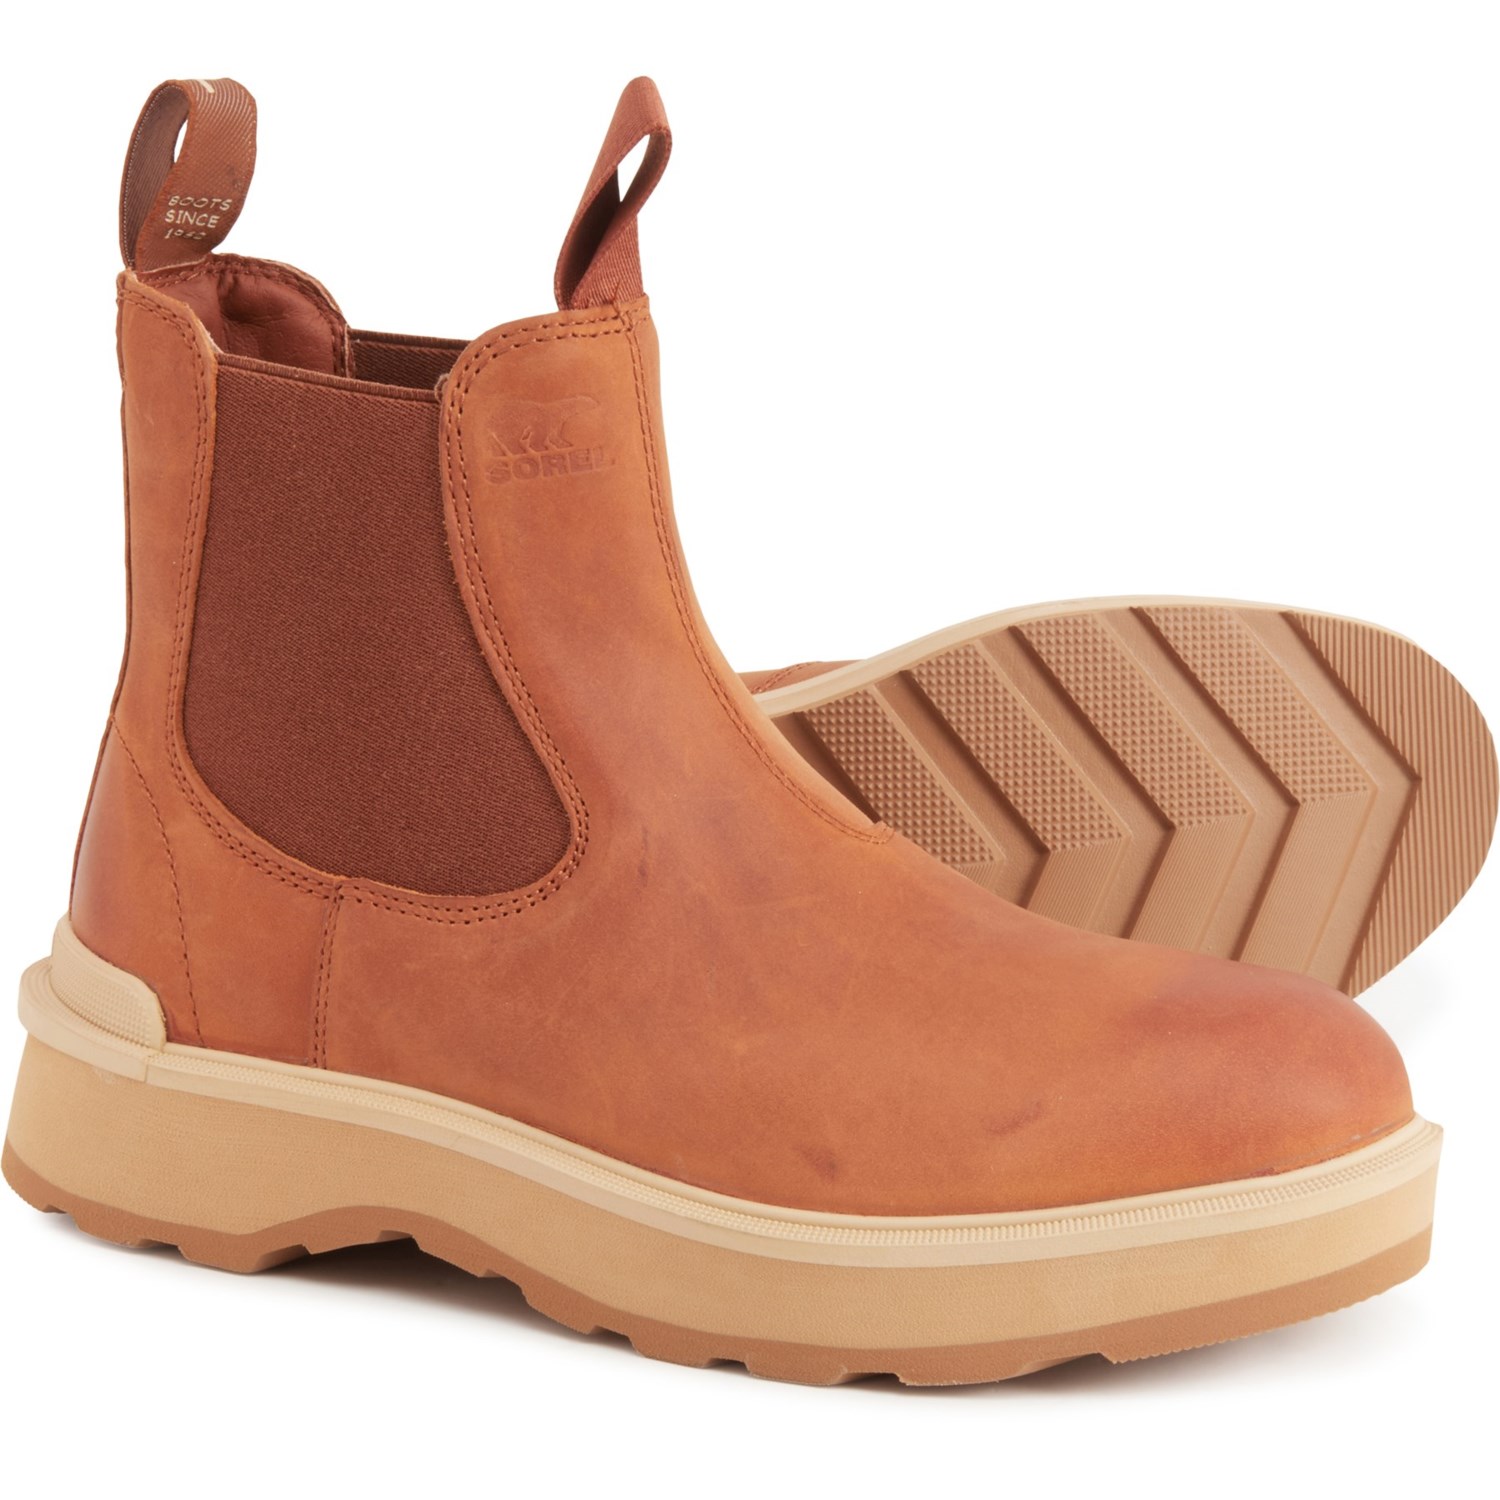 Sorel Hi-Line Chelsea Boots - Waterproof, Leather (For Women)